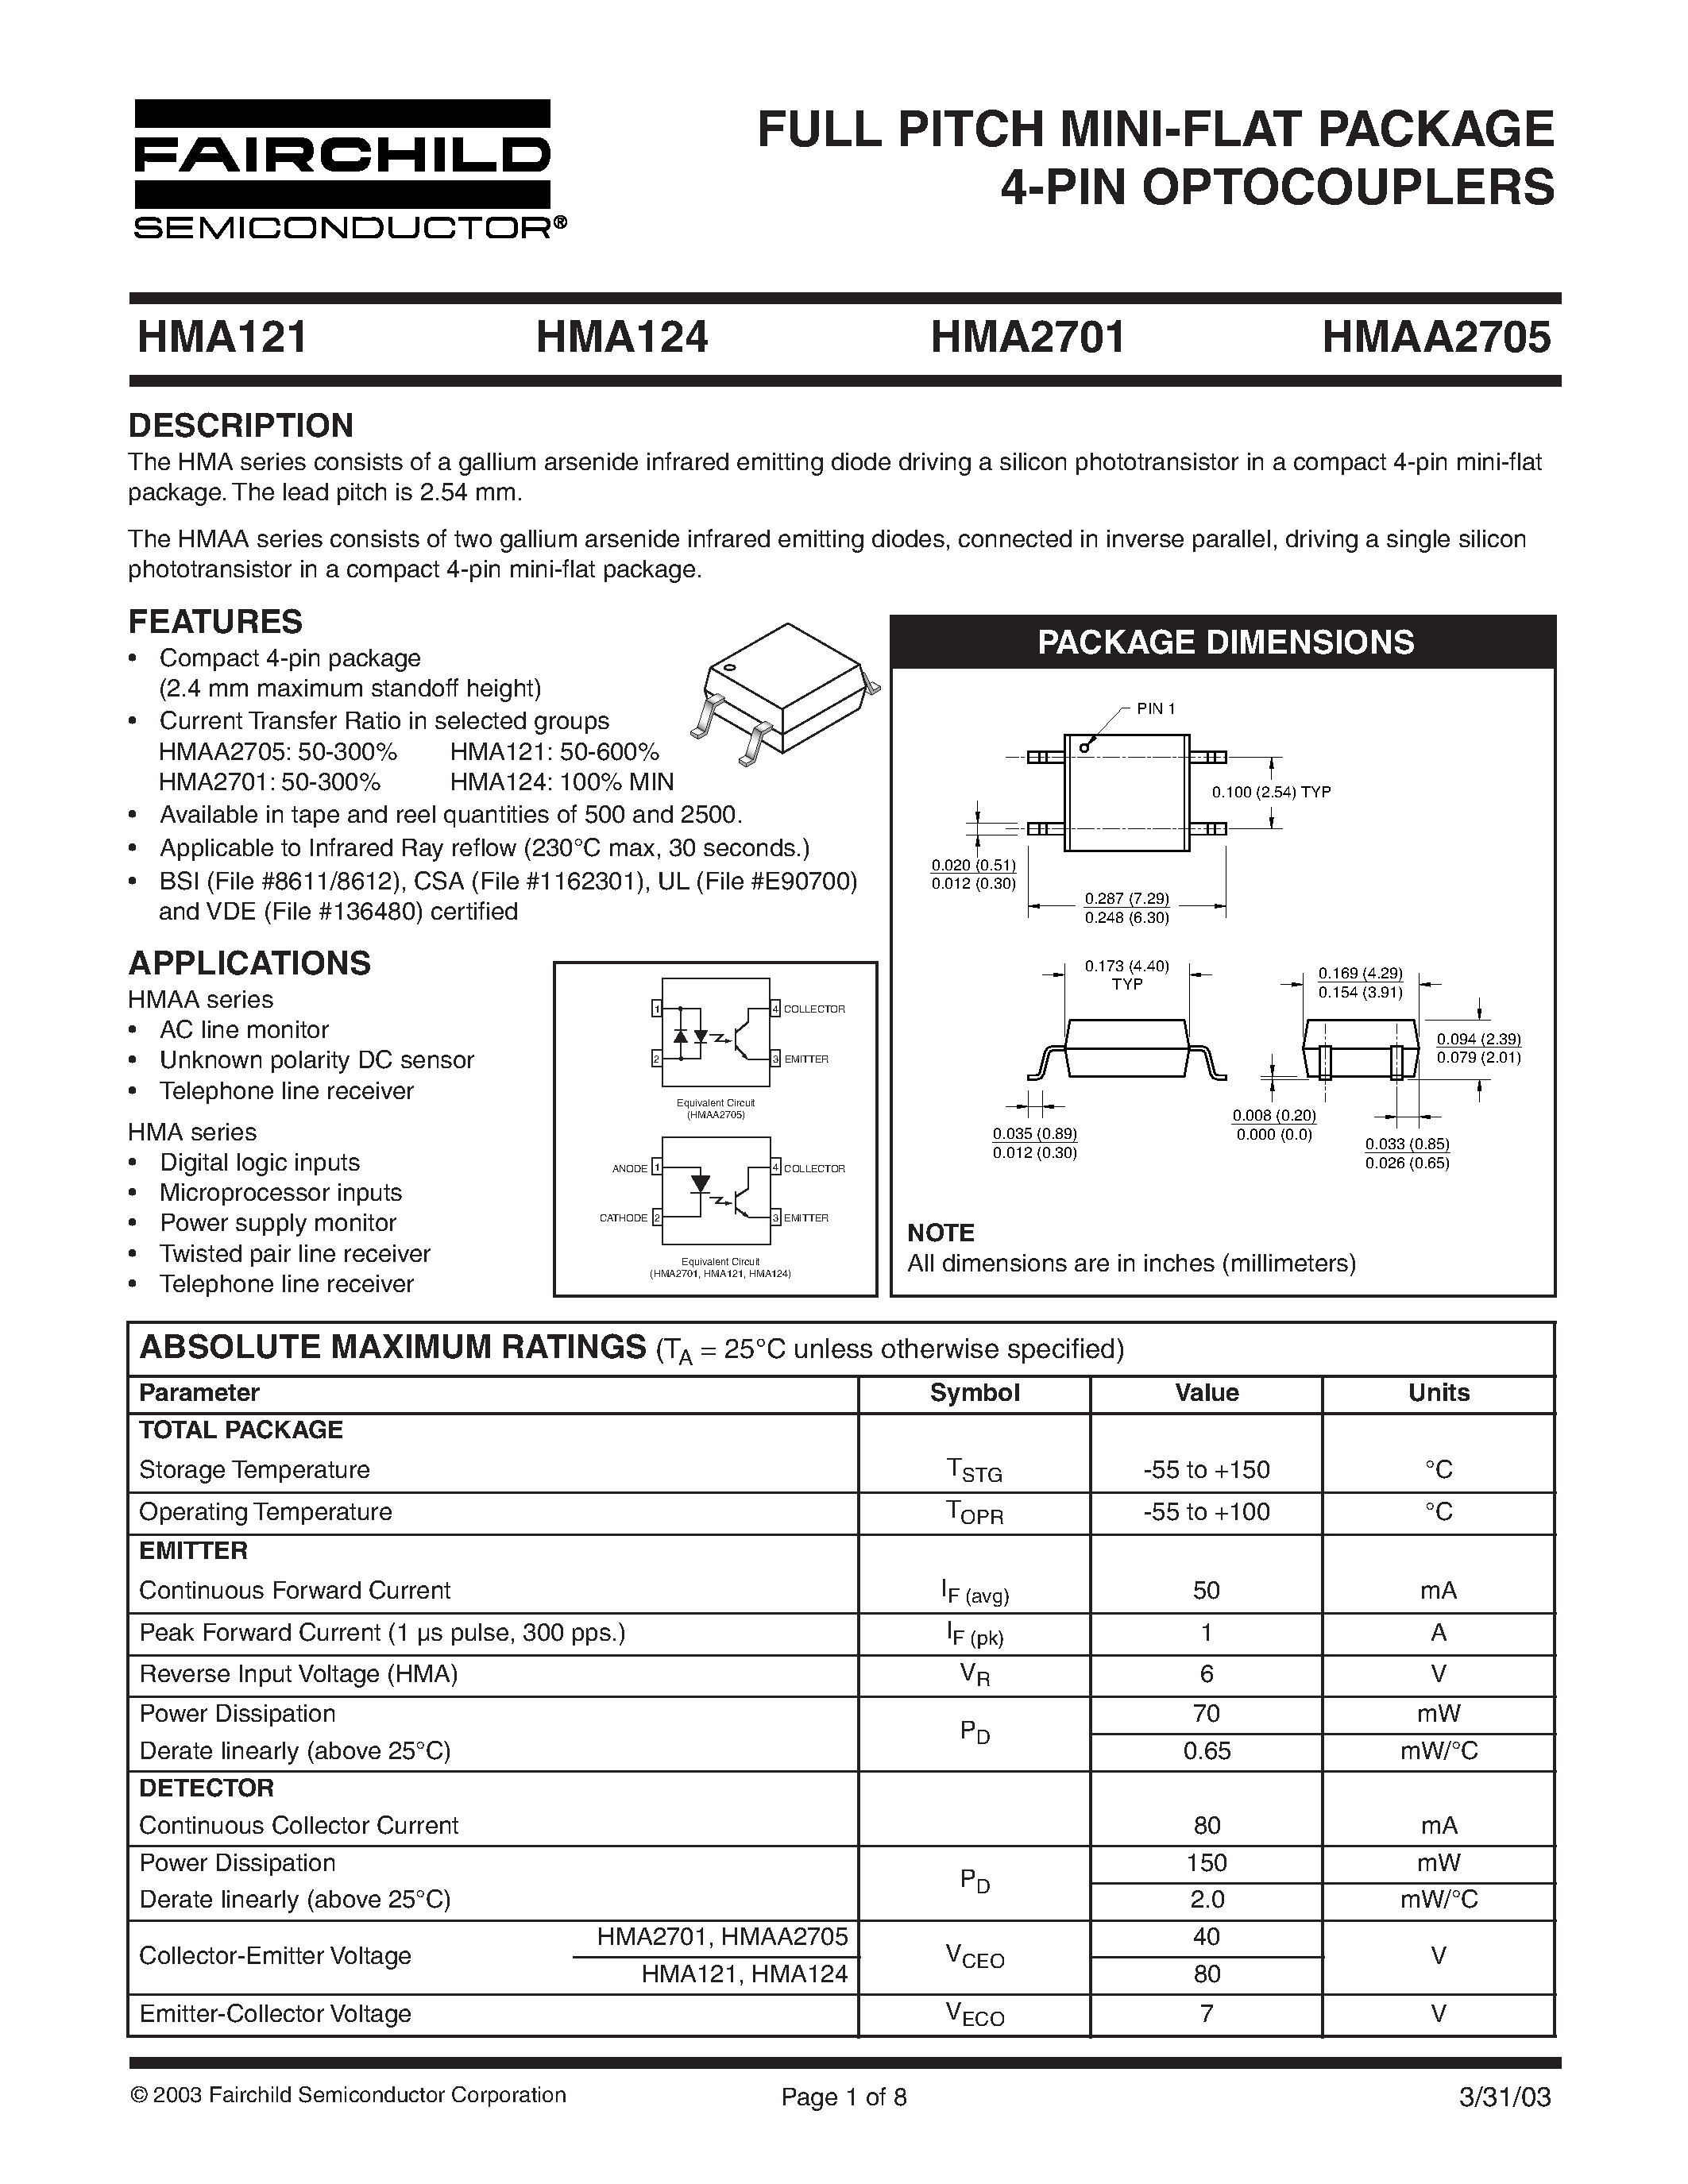 Datasheet HMA121 - FULL PITCH MINI-FLAT PACKAGE 4-PIN OPTOCOUPLERS page 1